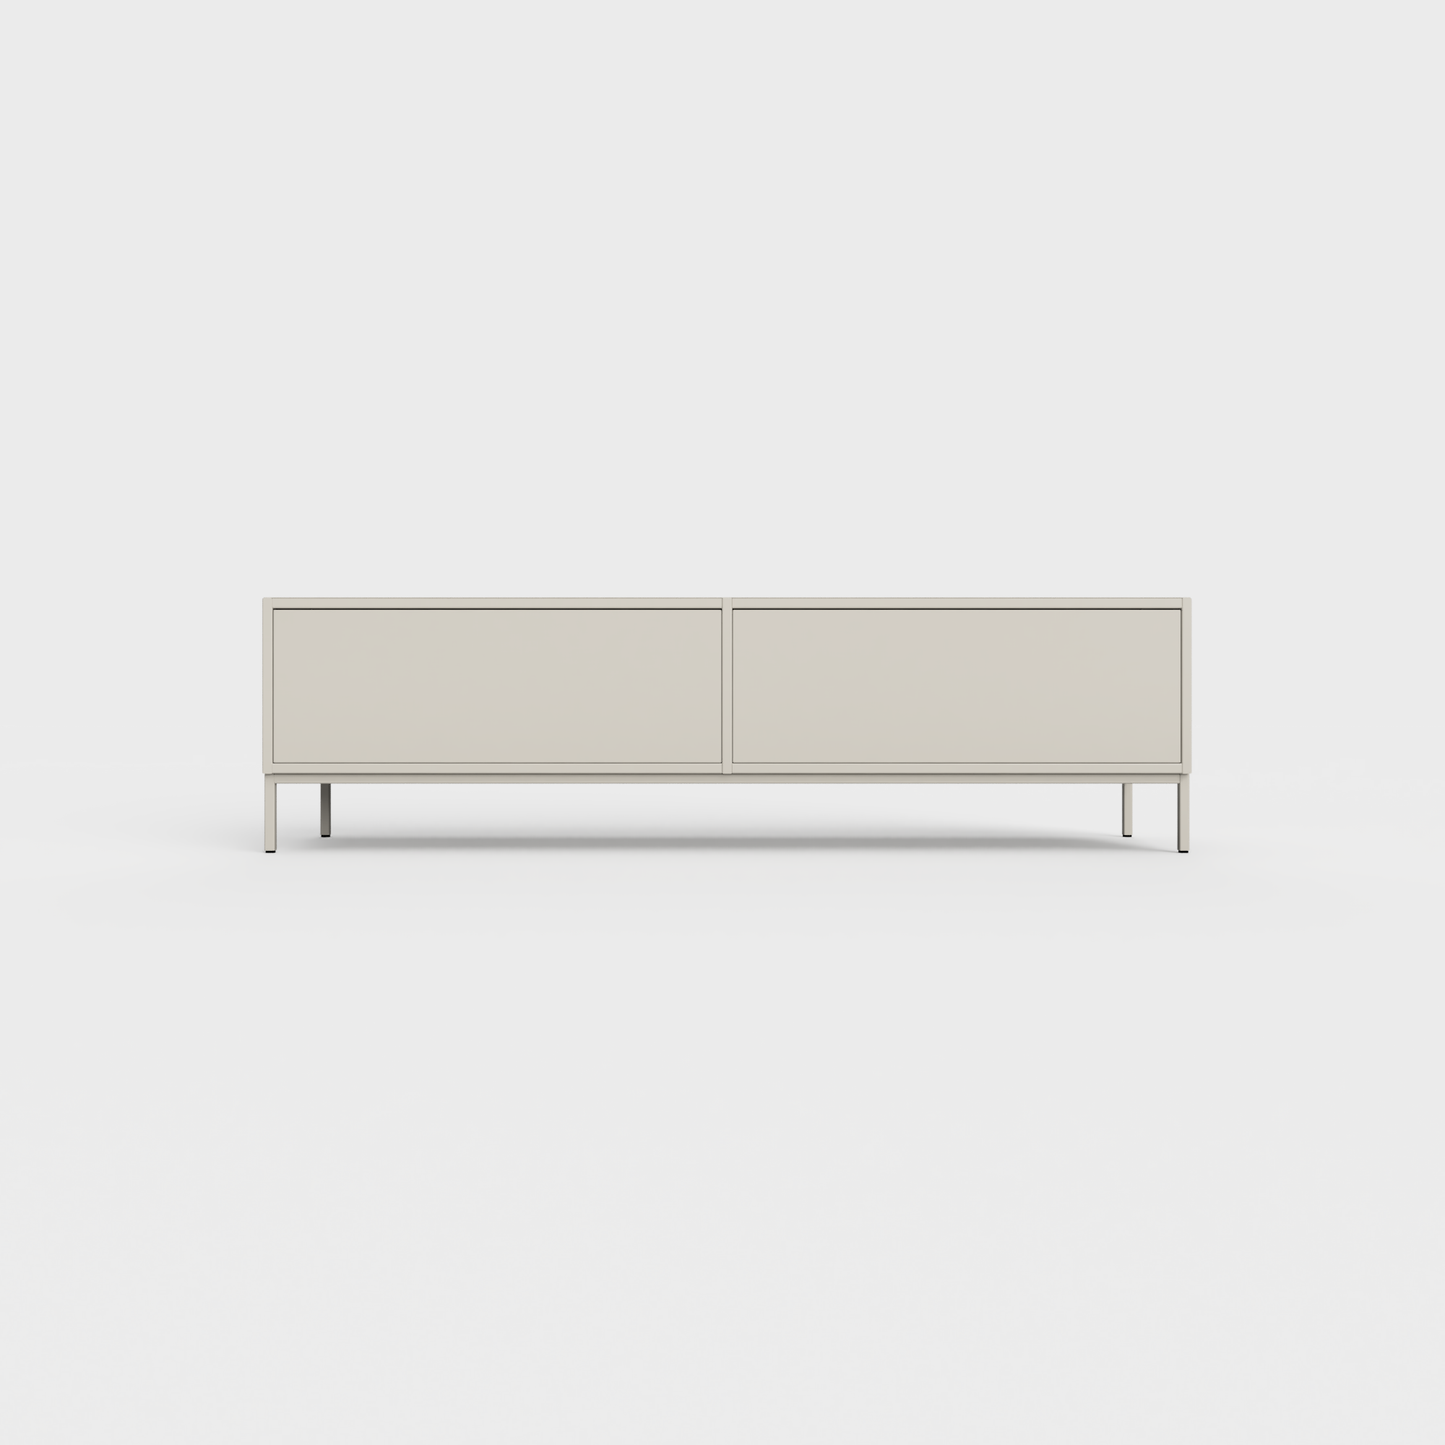 Prunus 01 Lowboard in Light Beige color, powder-coated steel, elegant and modern piece of furniture for your living room